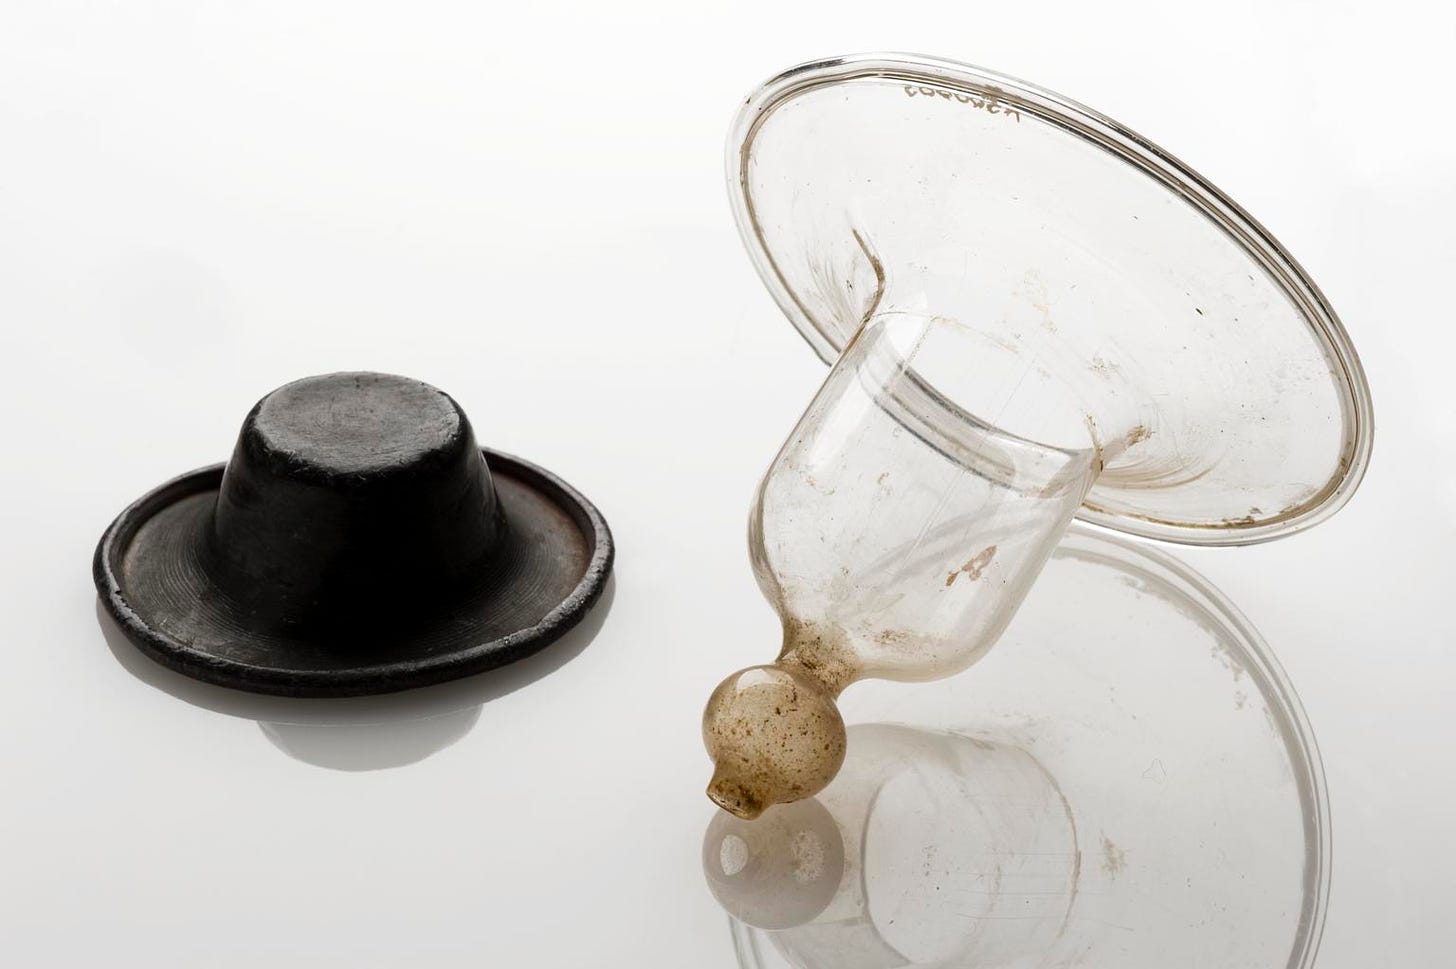 on left, a dark lead nipple shield, on right, a glass nipple shield shaped like a bell